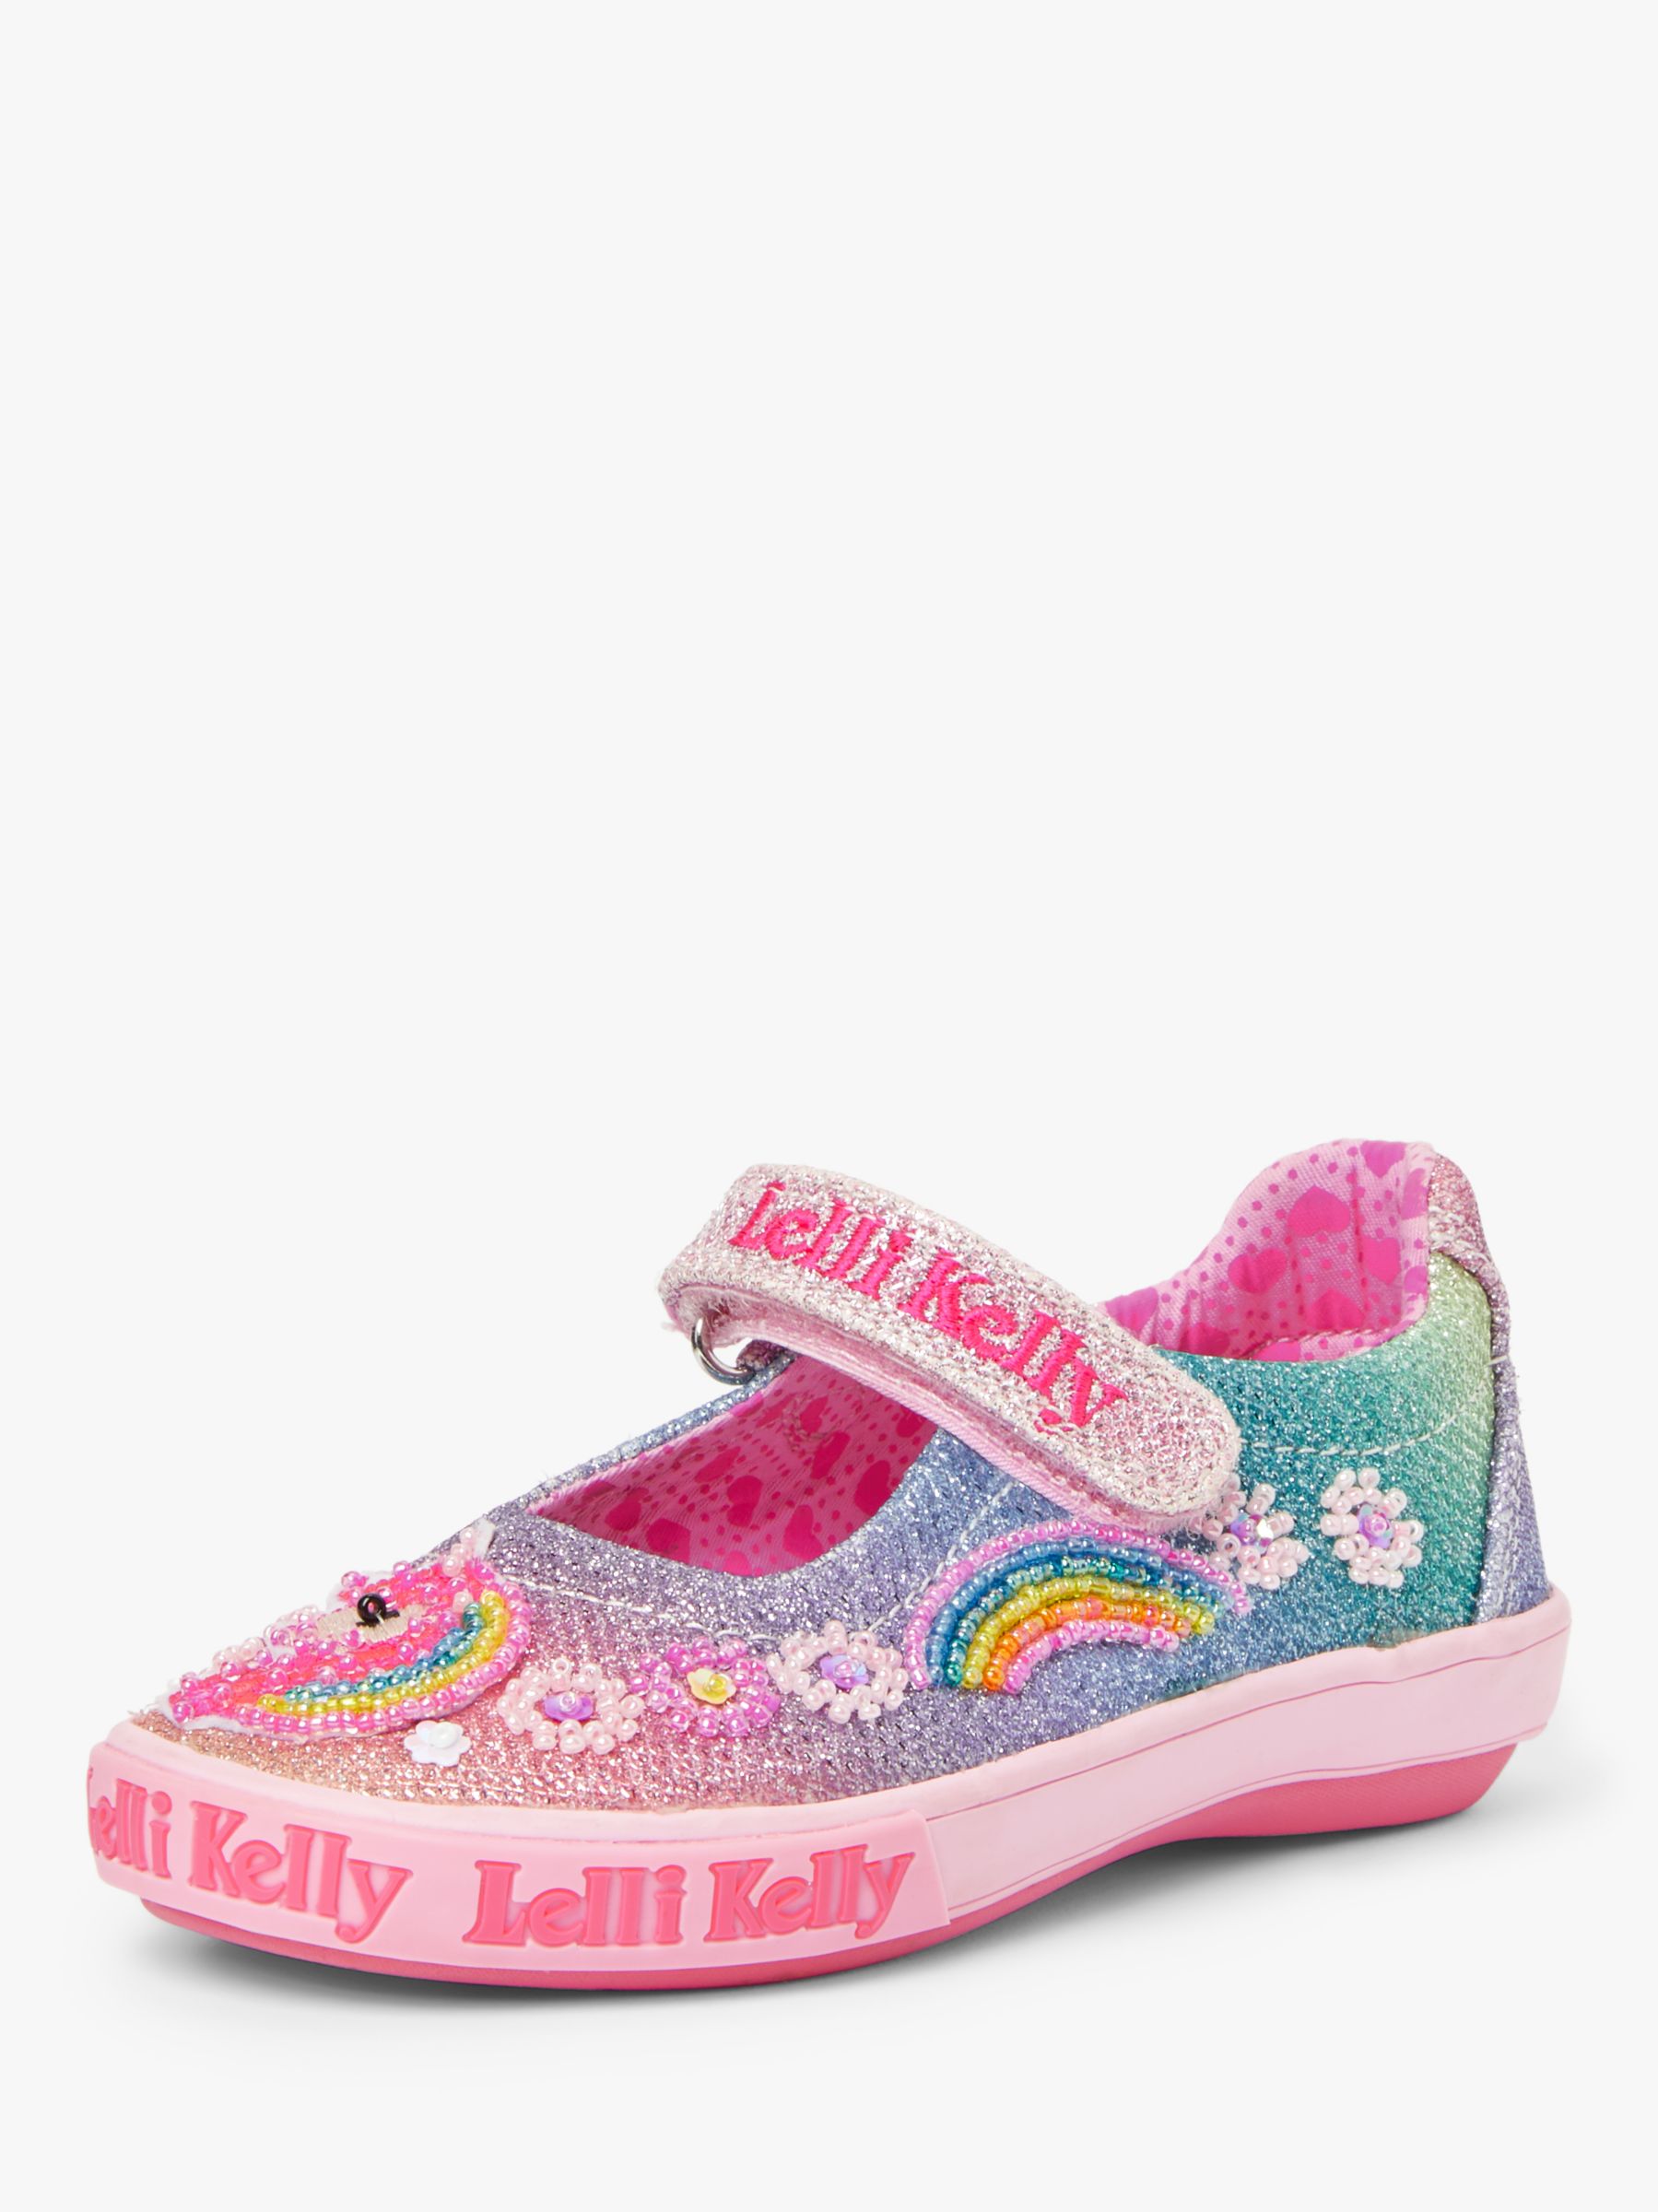 Lelli Kelly Children s Rainbow  Unicorn  Mary Jane Shoes  at 